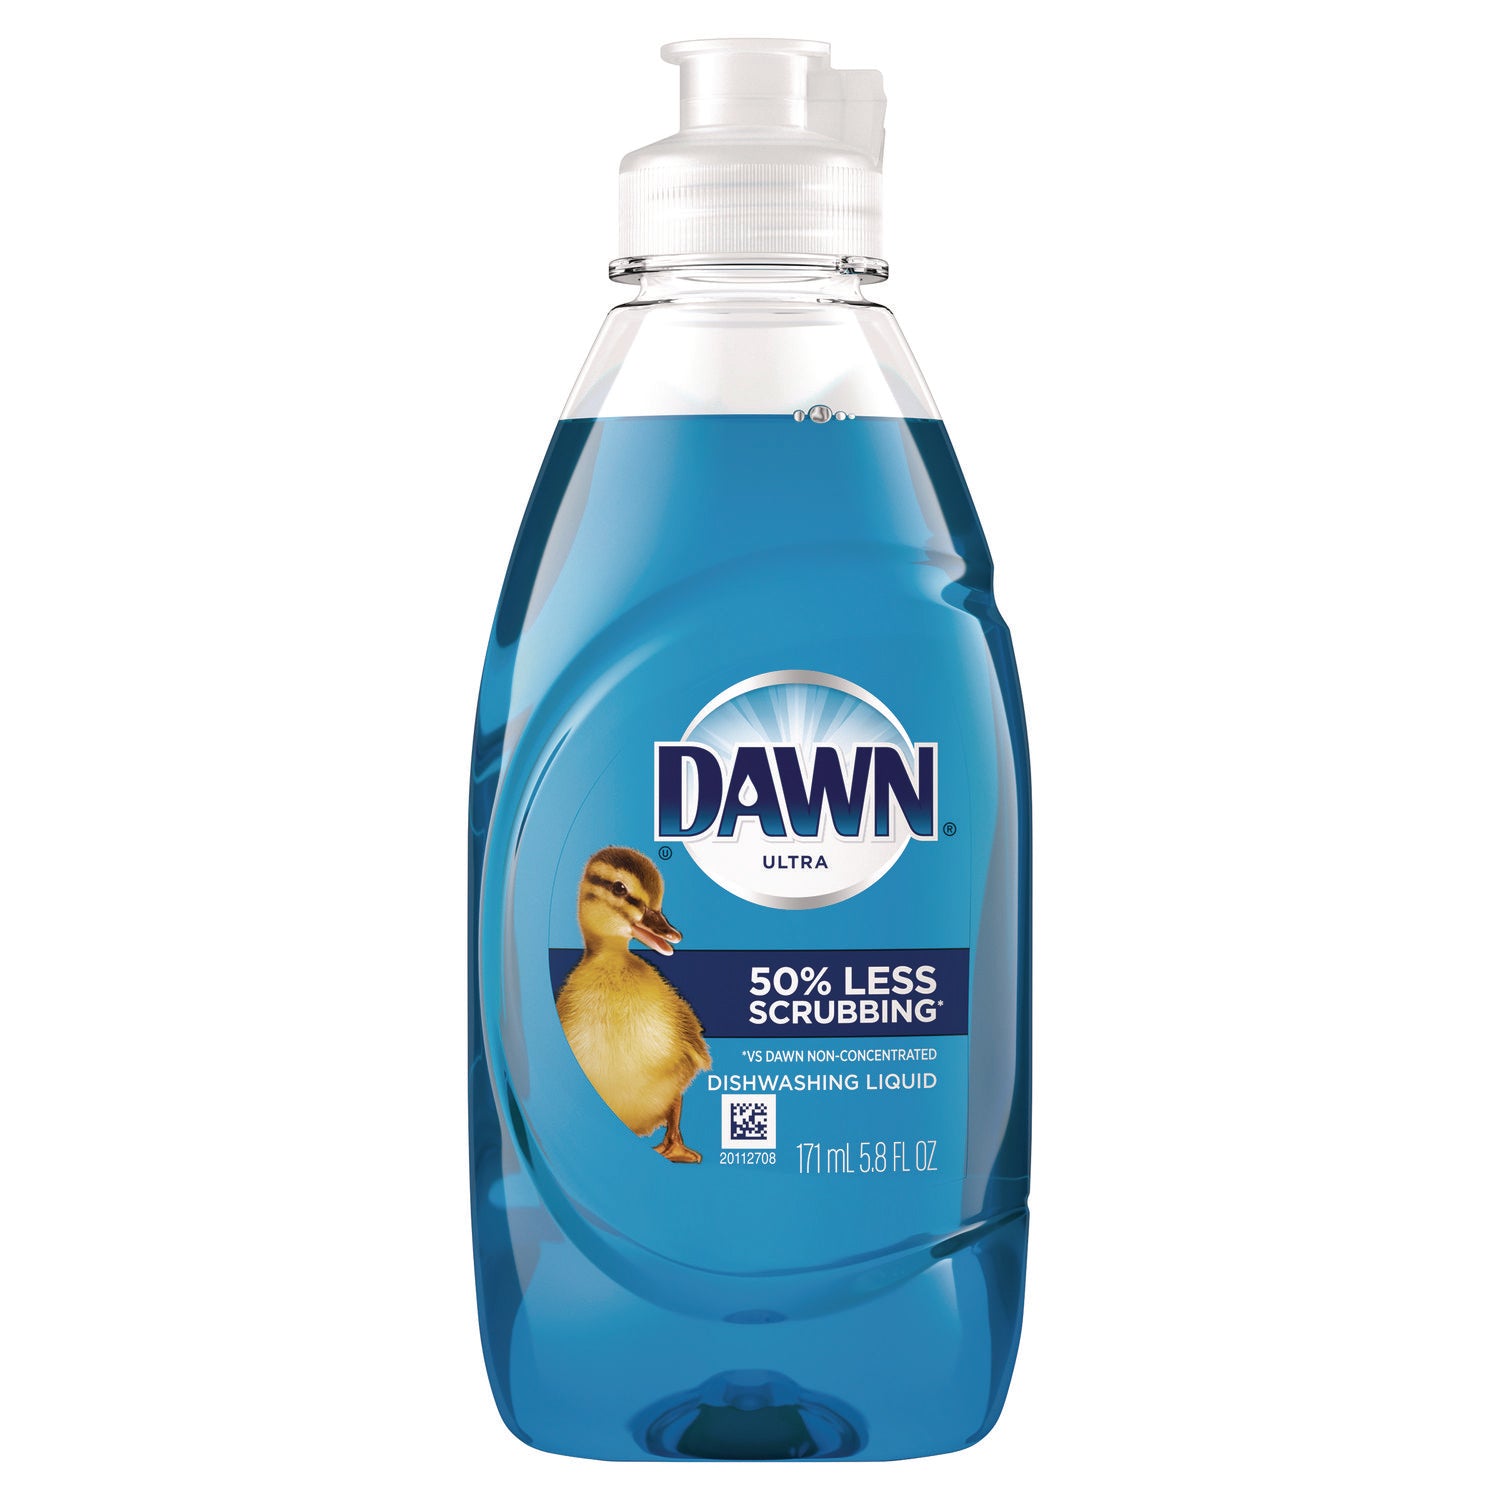 ultra-liquid-dish-detergent-dawn-original-58-oz-bottle-18-carton_pgc10926 - 1